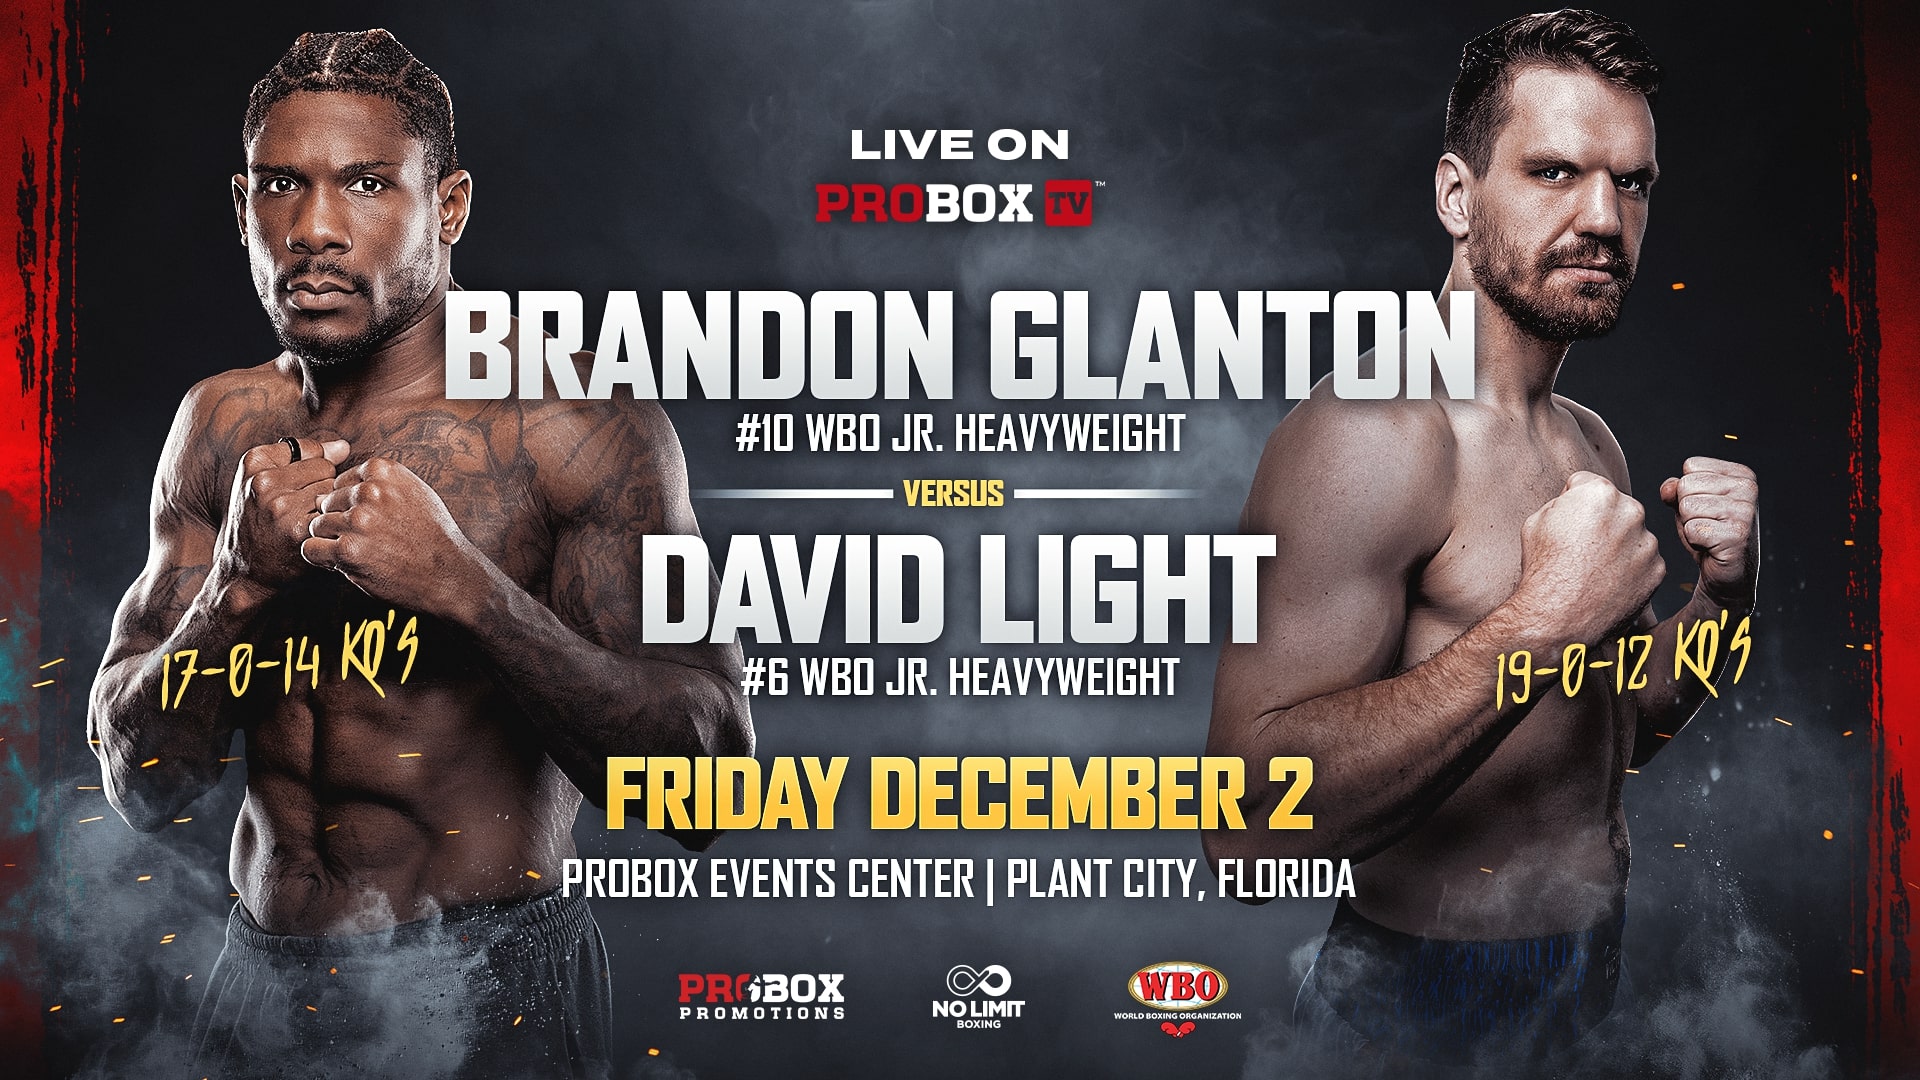 Brandon Glanton vs David Light December 2nd at ProBox Event Center, Plant City, FL